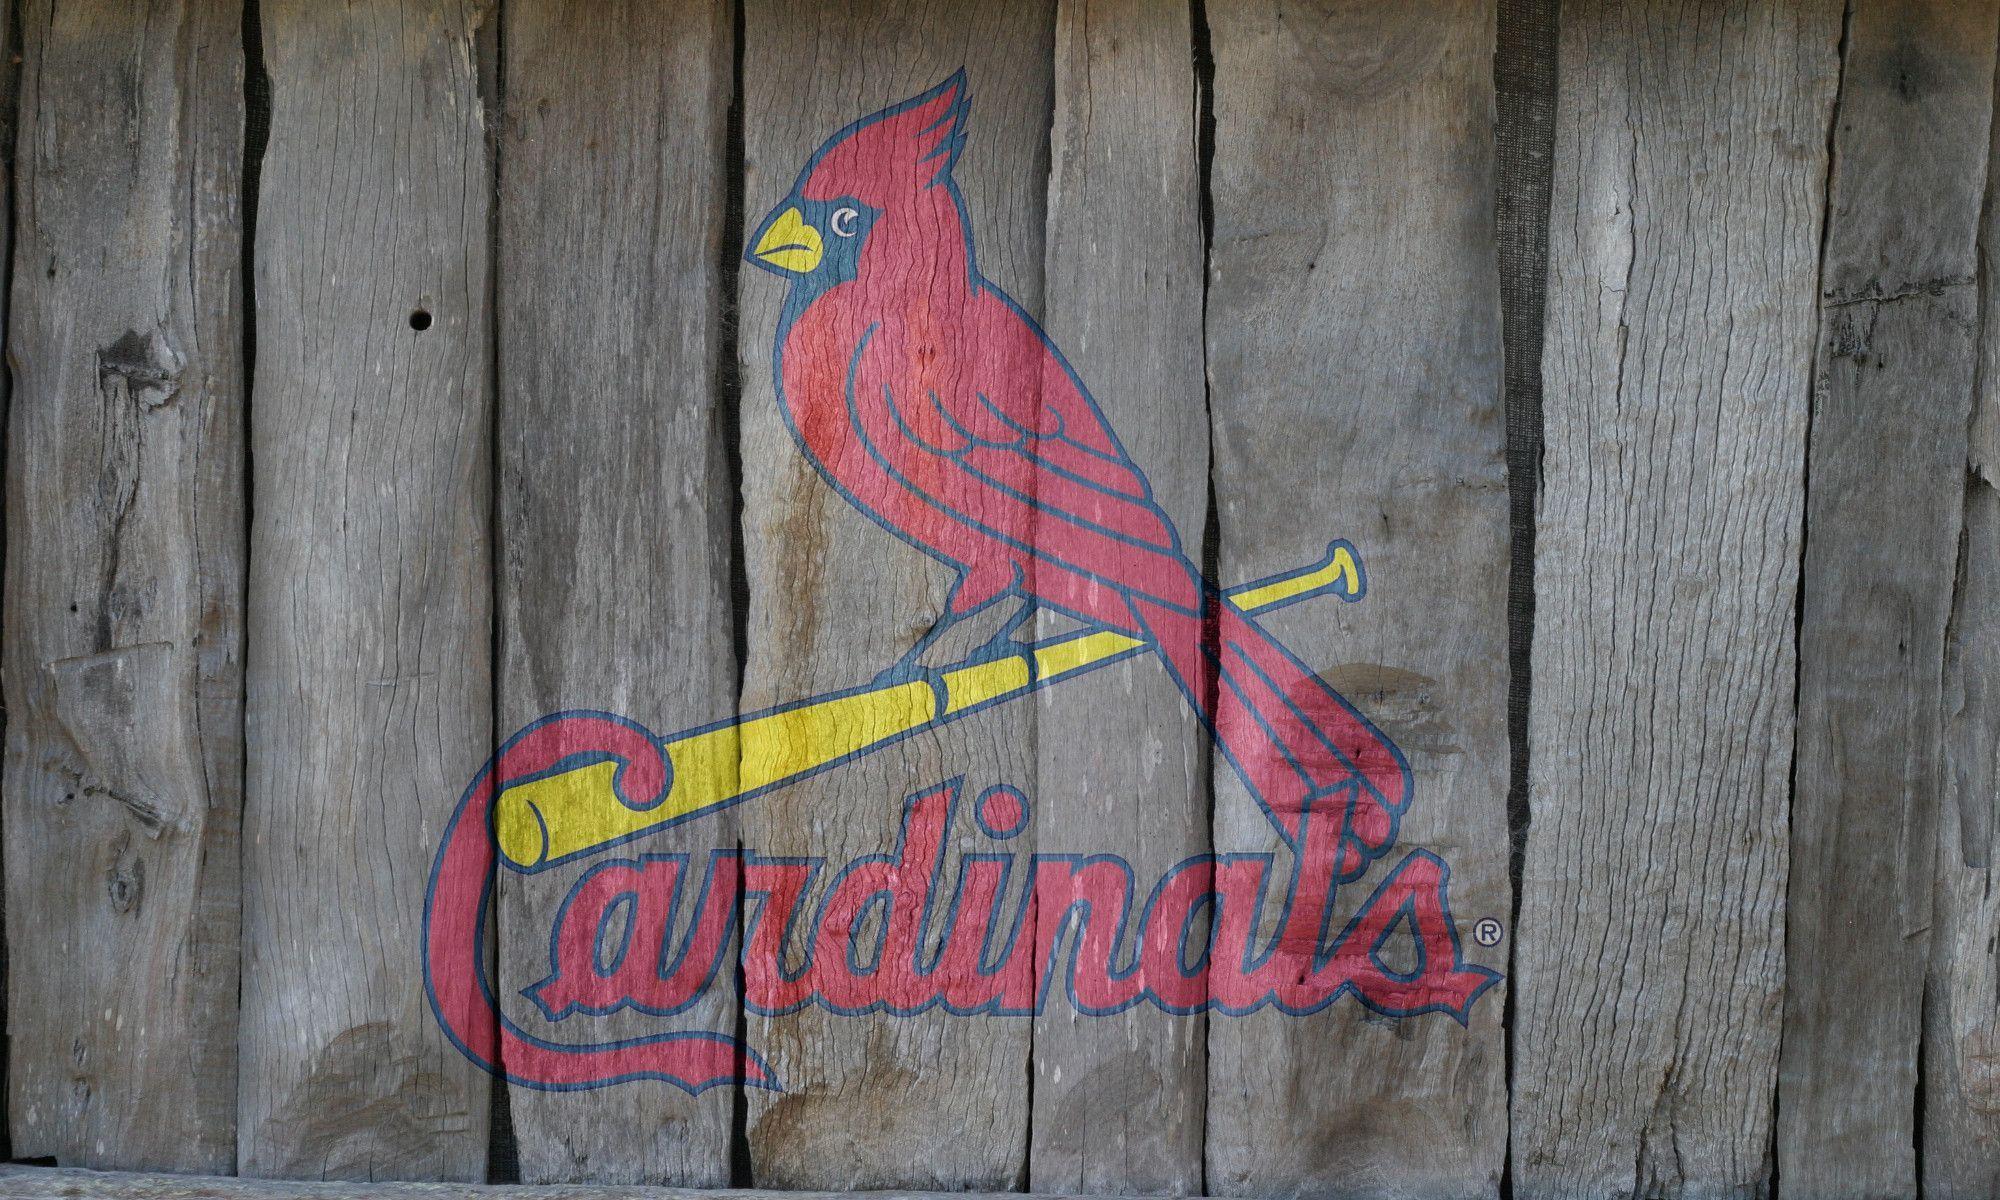 St. Louis Cardinals wallpaper. St. Louis Cardinals background